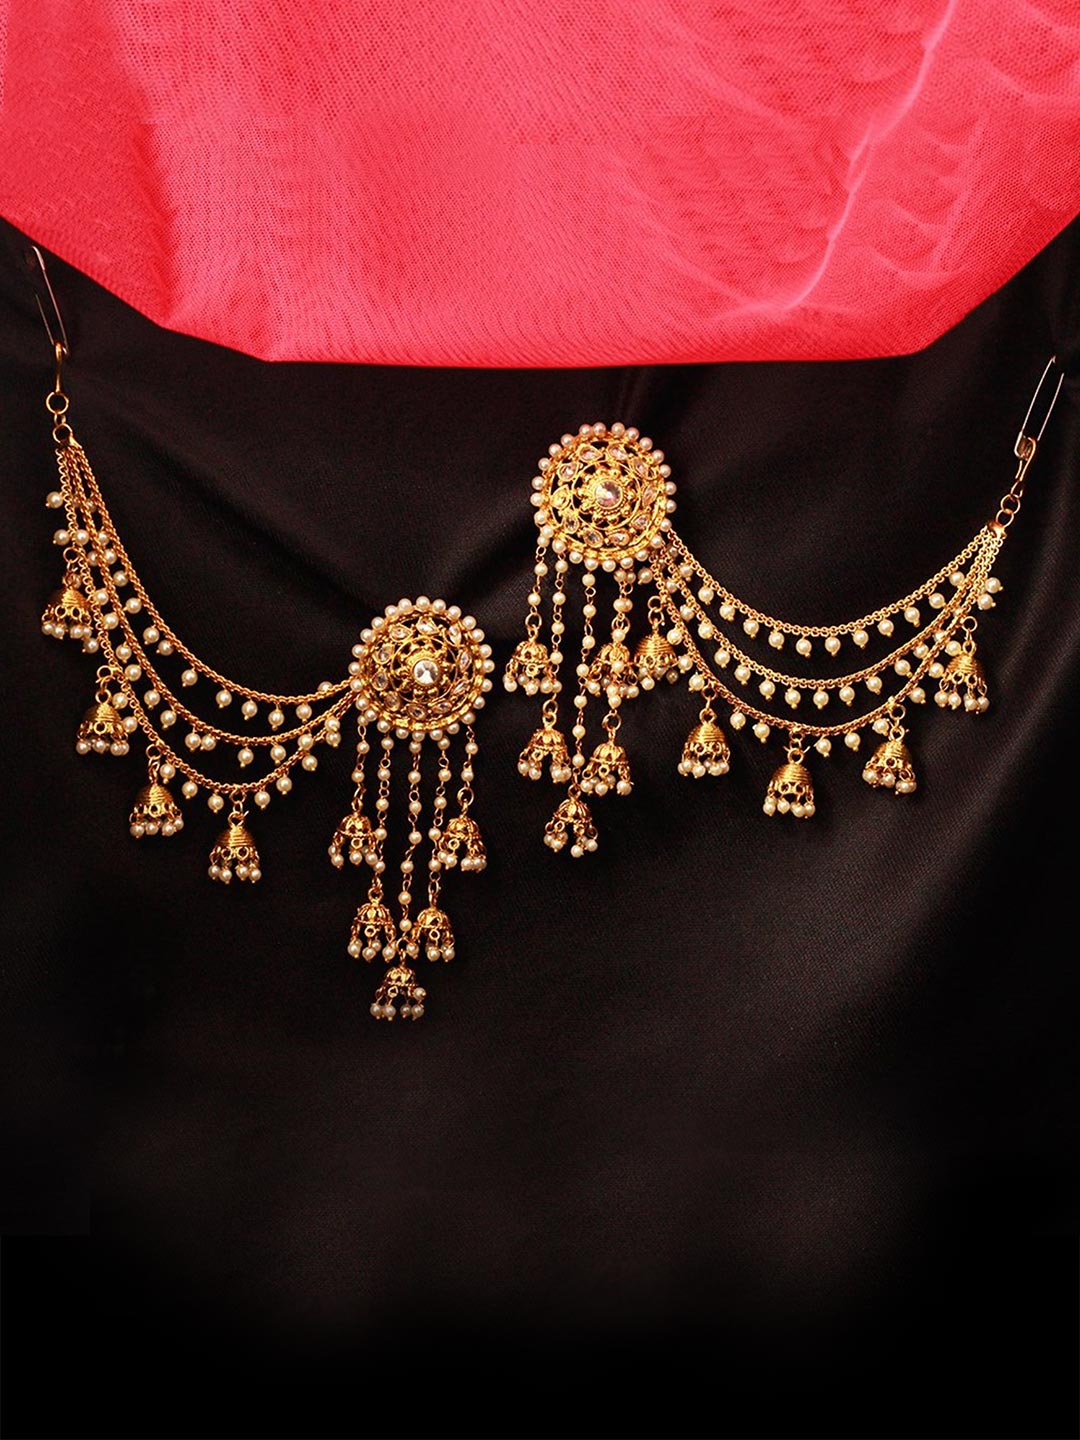 Women's Party Wear 18k Gold Plated White Polki & Pearl Bahubali Jhumki/Jhumka Earrings For Girls and Women - Priyaasi